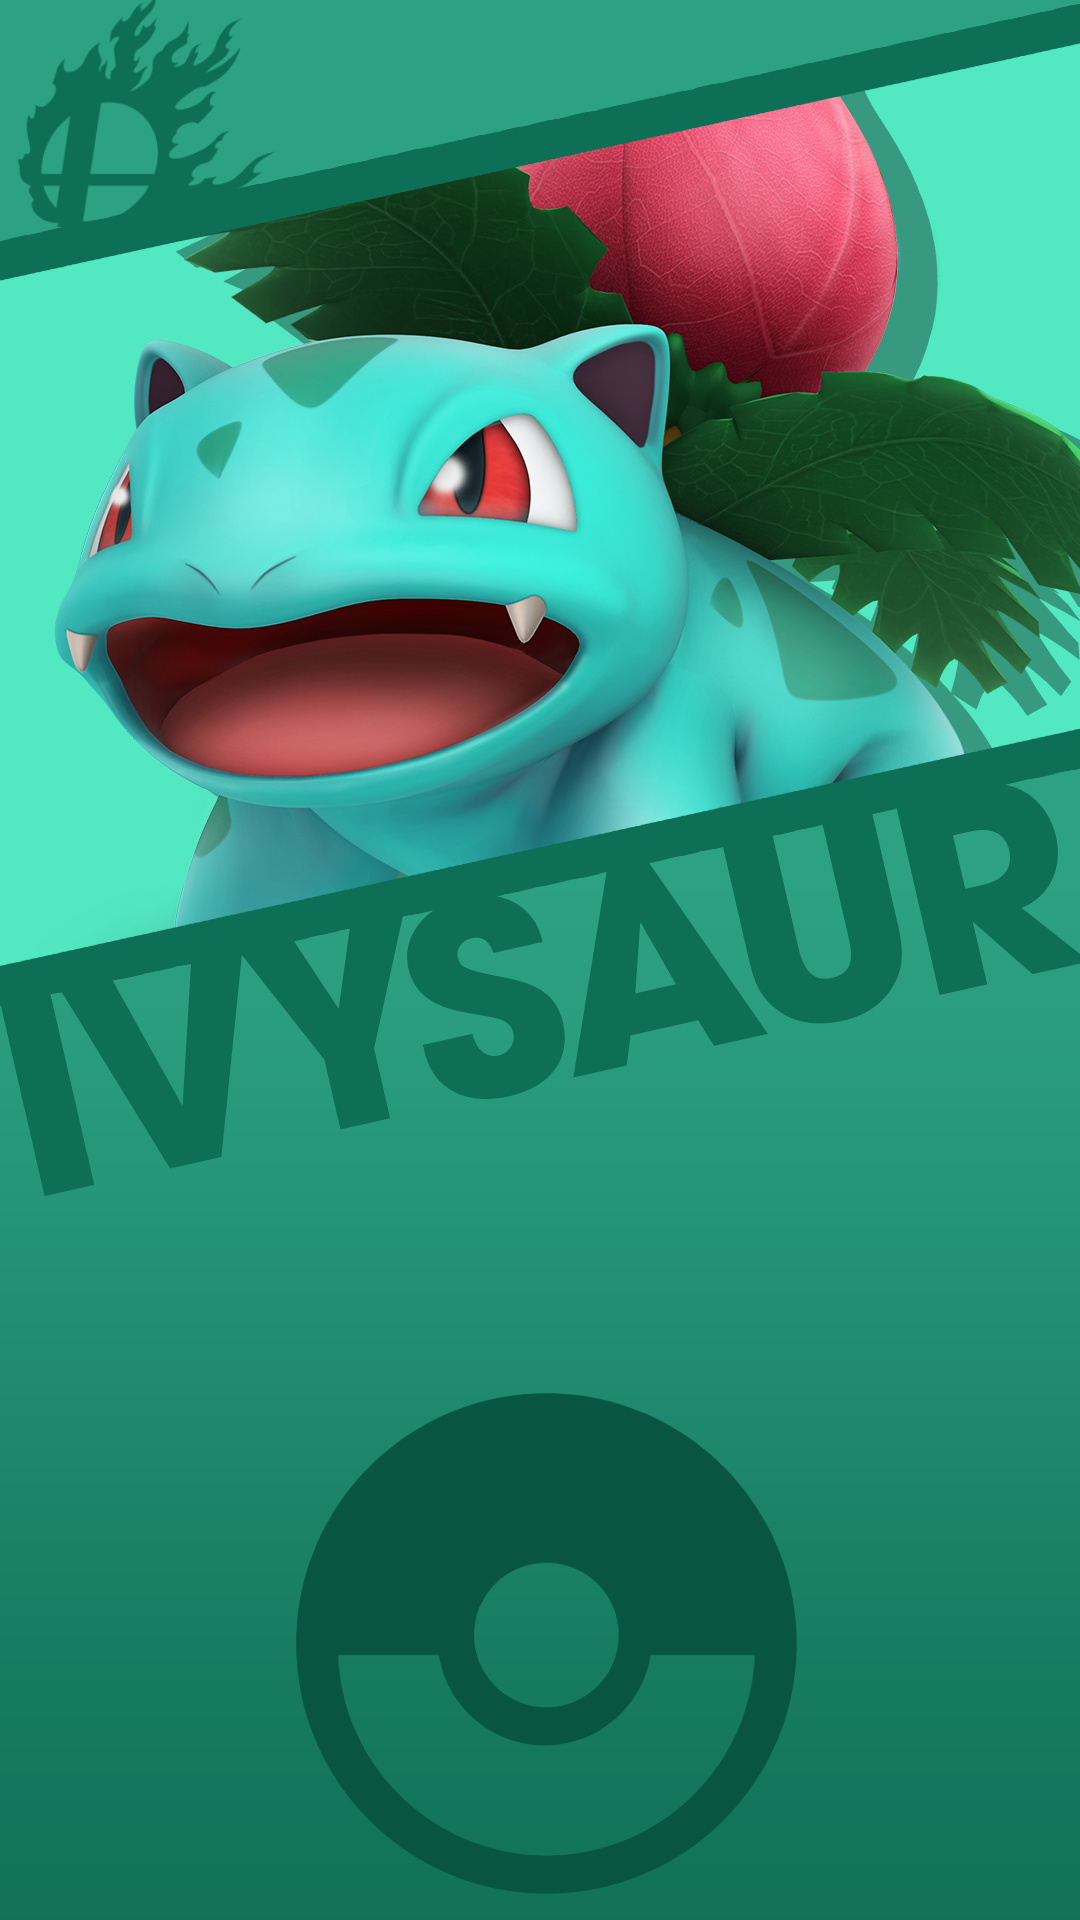 Ivysaur, Super Smash Bros, Ultimate wallpaper, Pokemon, 1080x1920 Full HD Handy